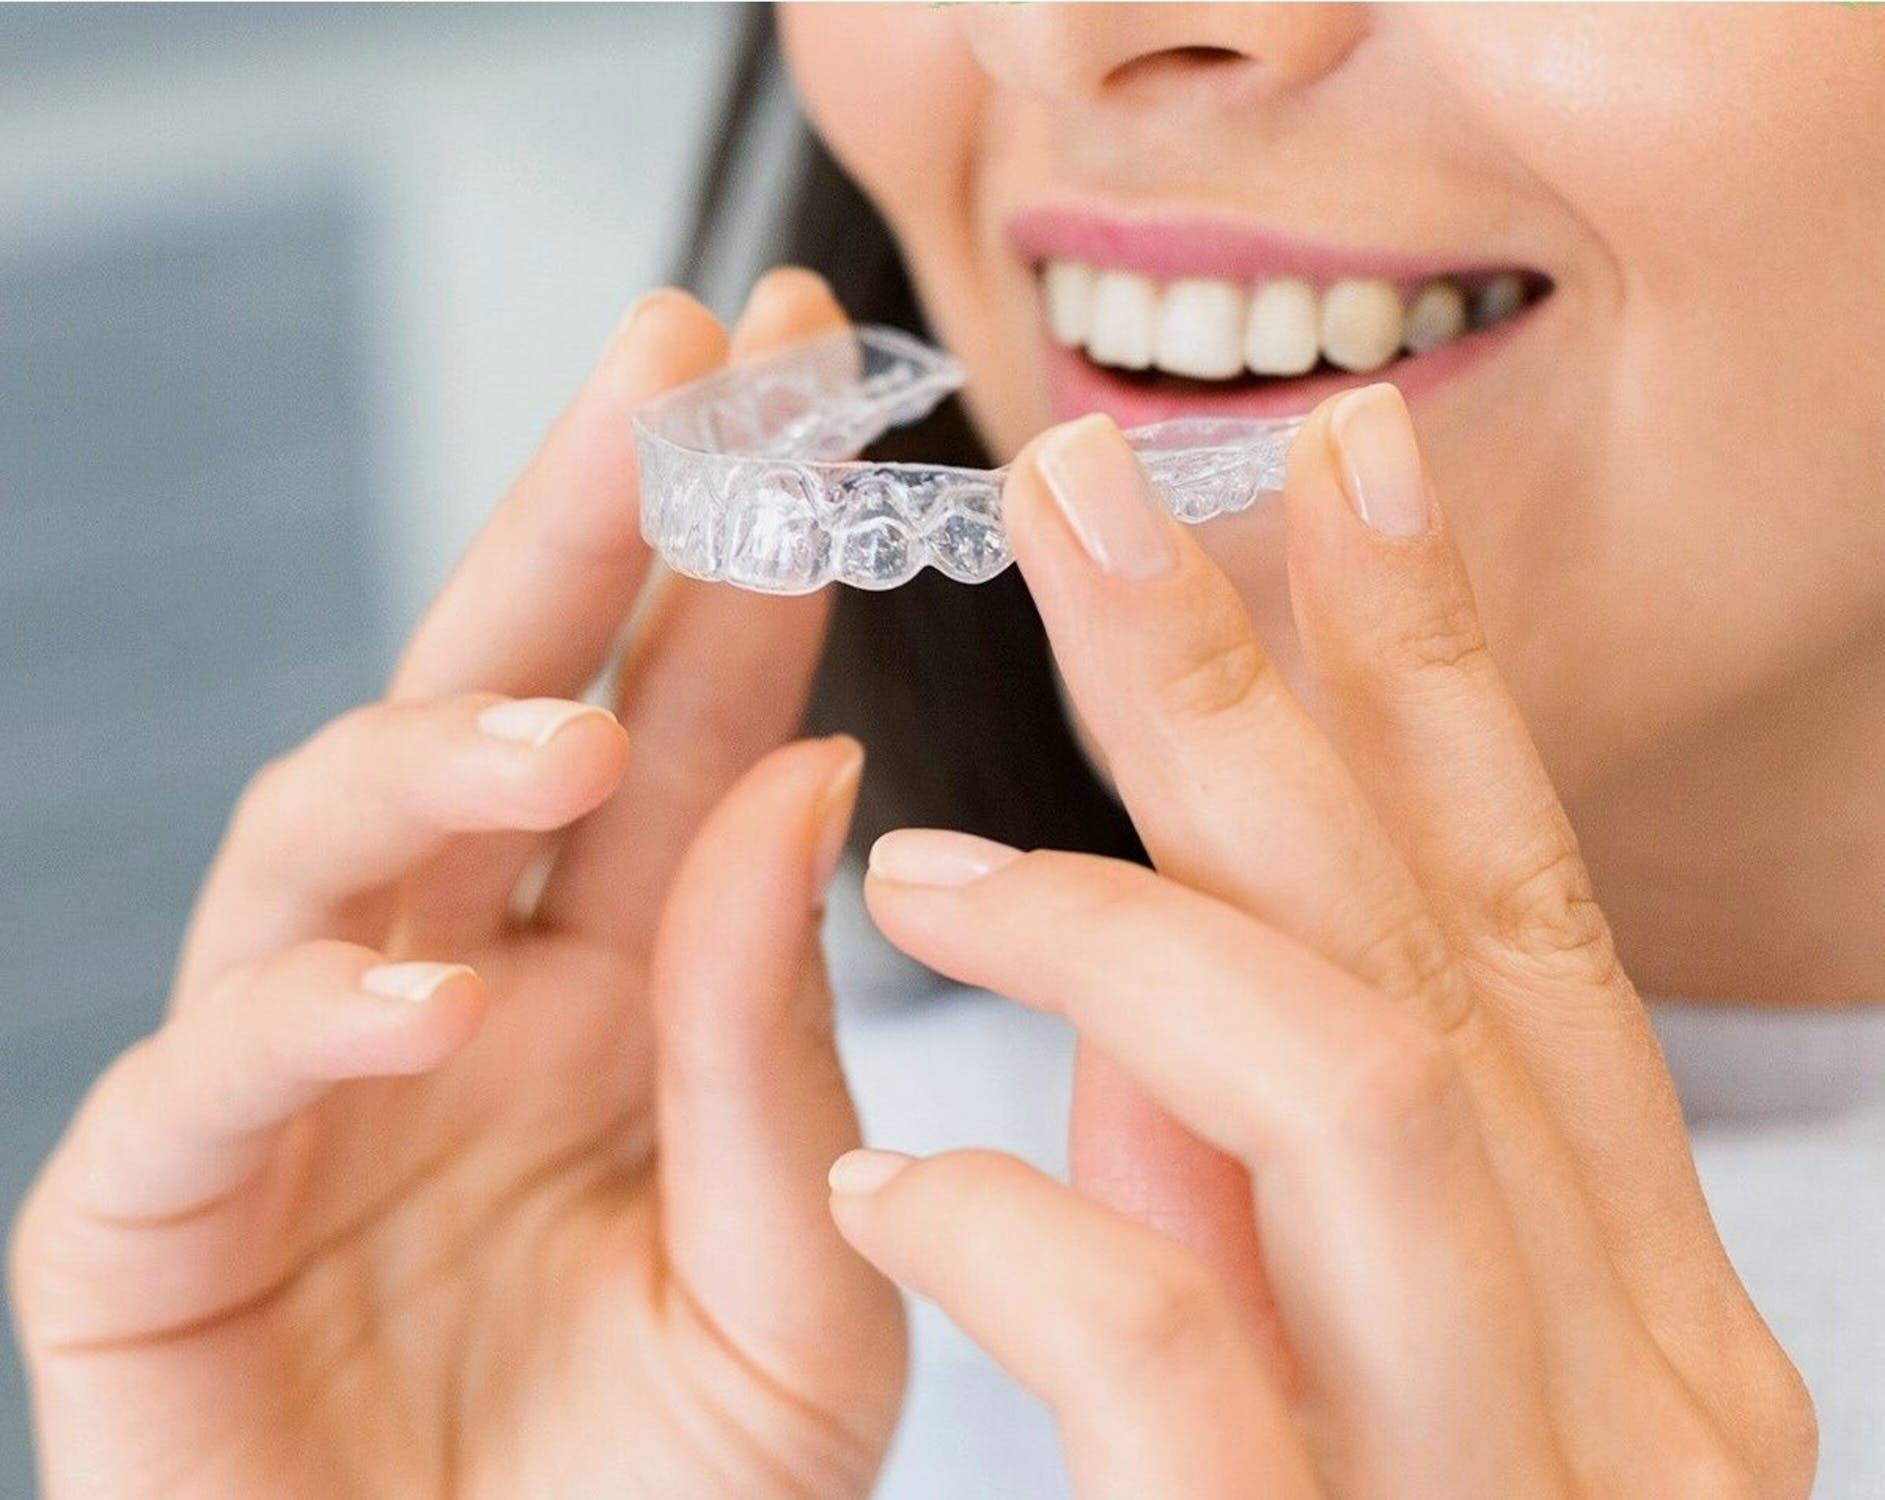 Keep healthy teeth while wearing Invisalign